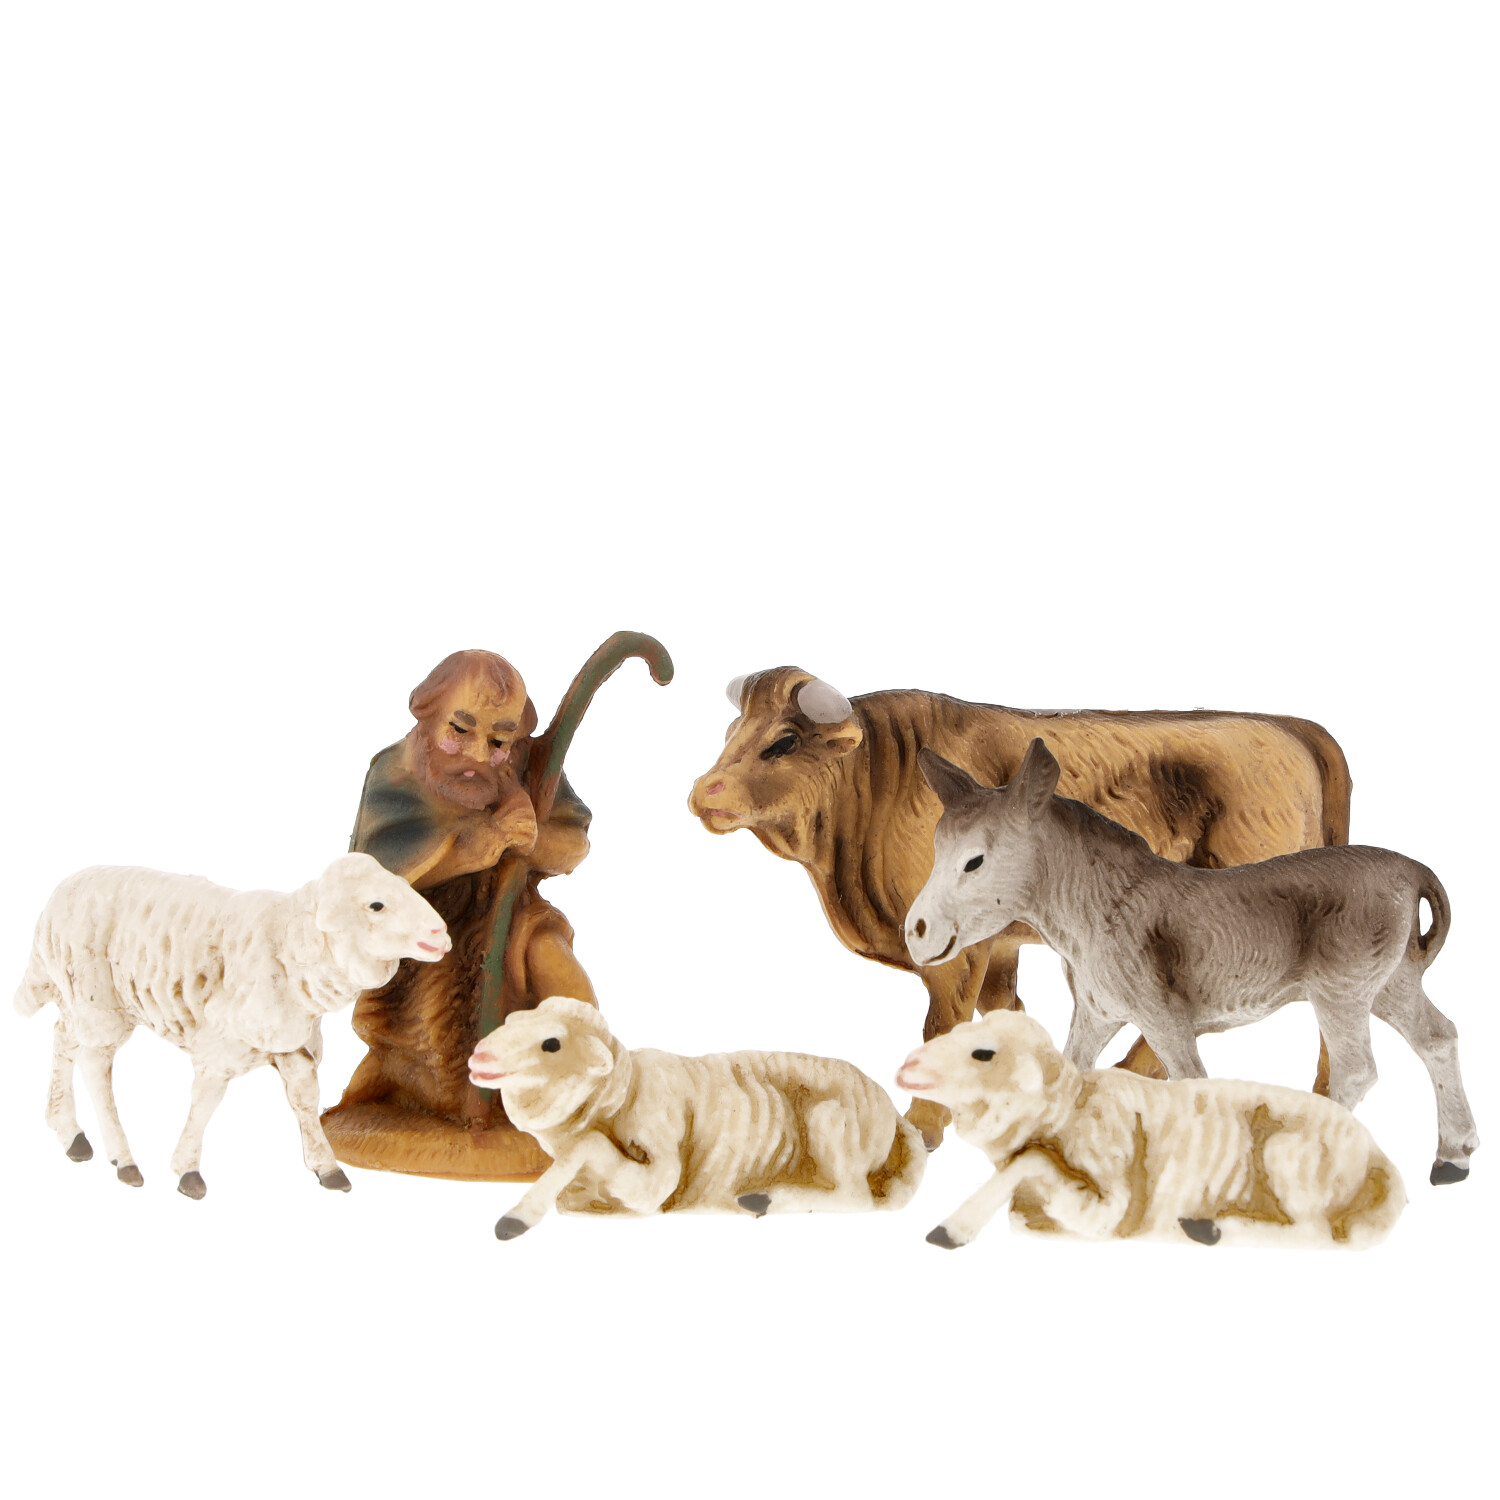 Shepherd with crib animals - Marolin Plastik - Resin Nativity figure - made in Germany